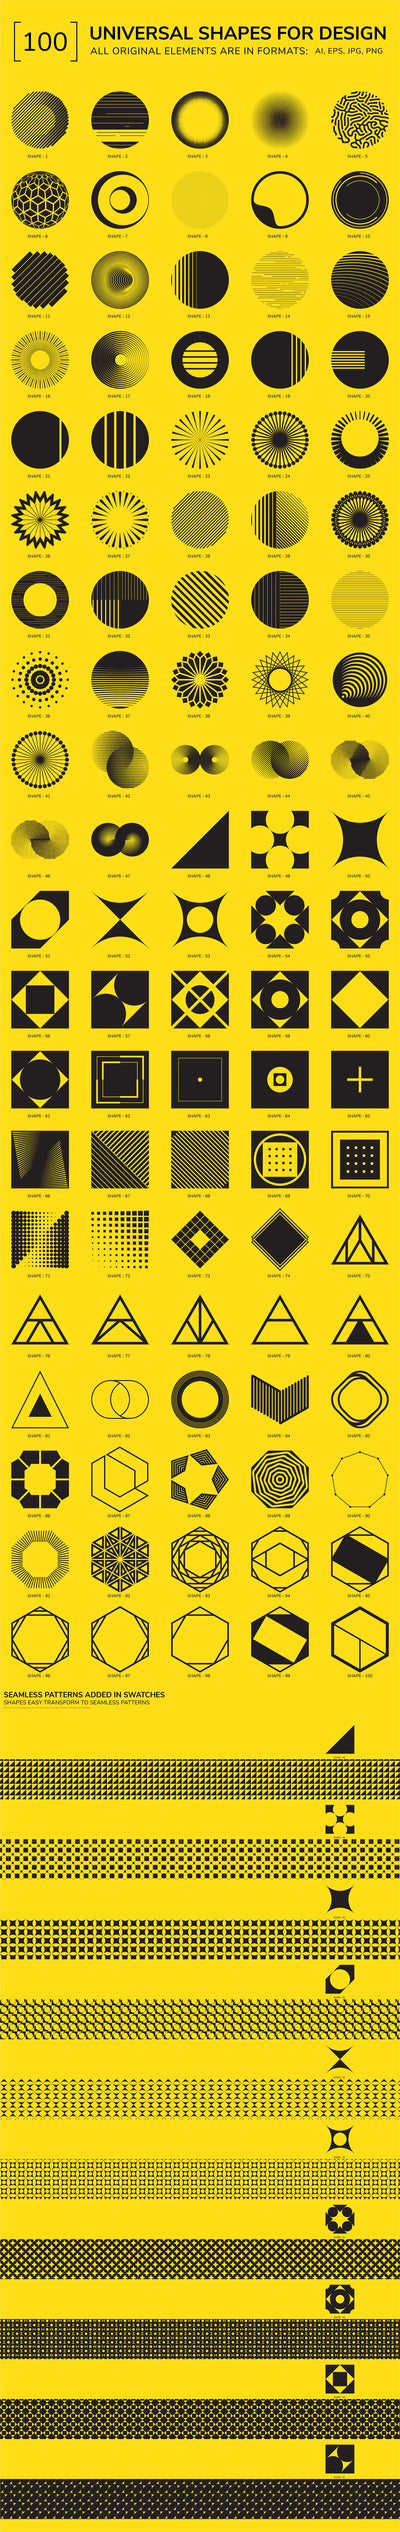 The Supreme Bundle Of 850+ Graphic Design Resources - Artixty